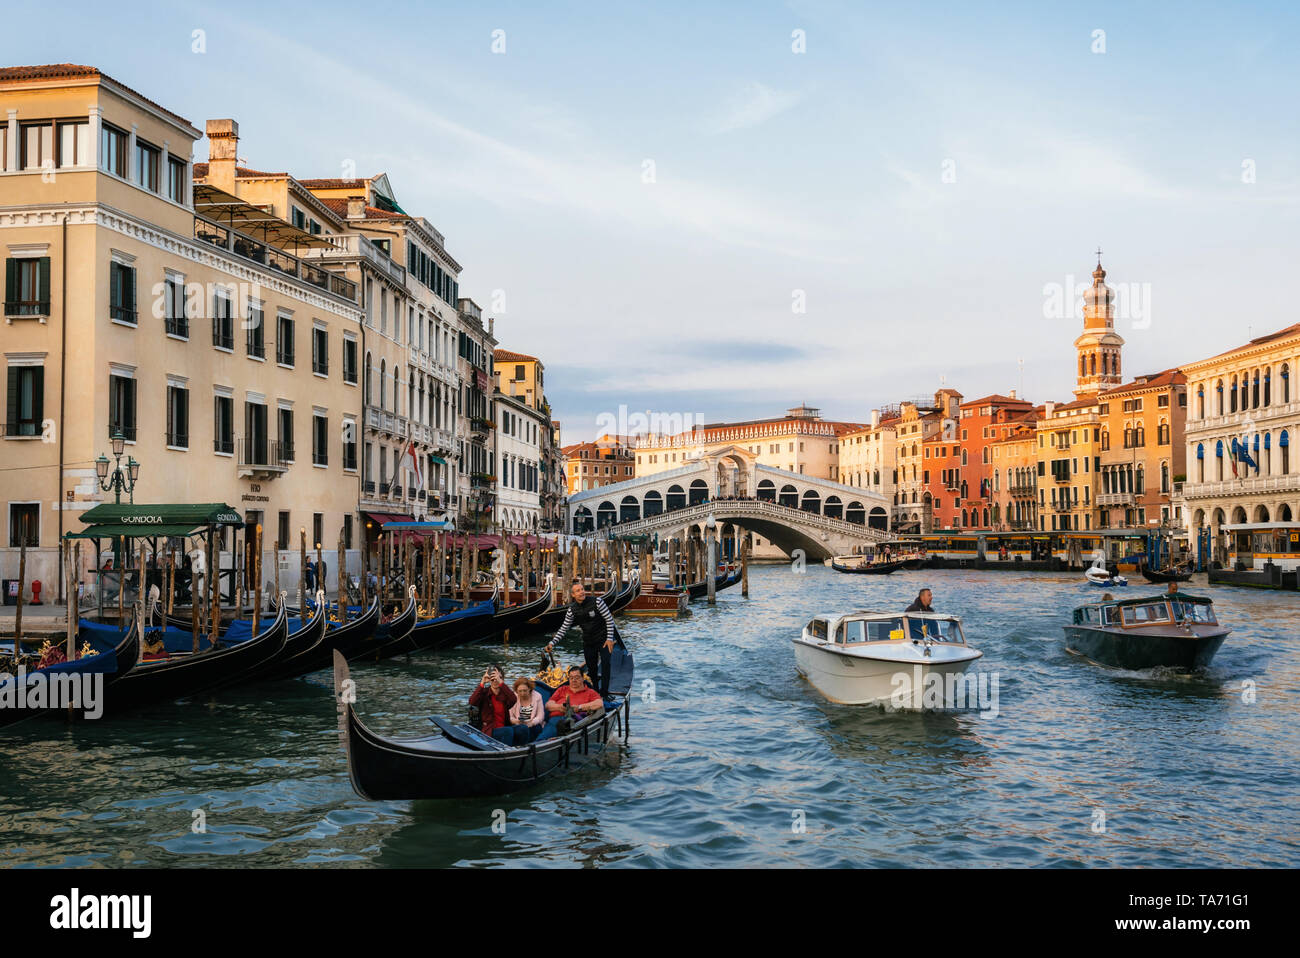 Venice, Italy - May 10, 2019: Rialto Bridge on Grand Canal with gondolas and speed boats taxi at sunset, Venice, Italy Stock Photo